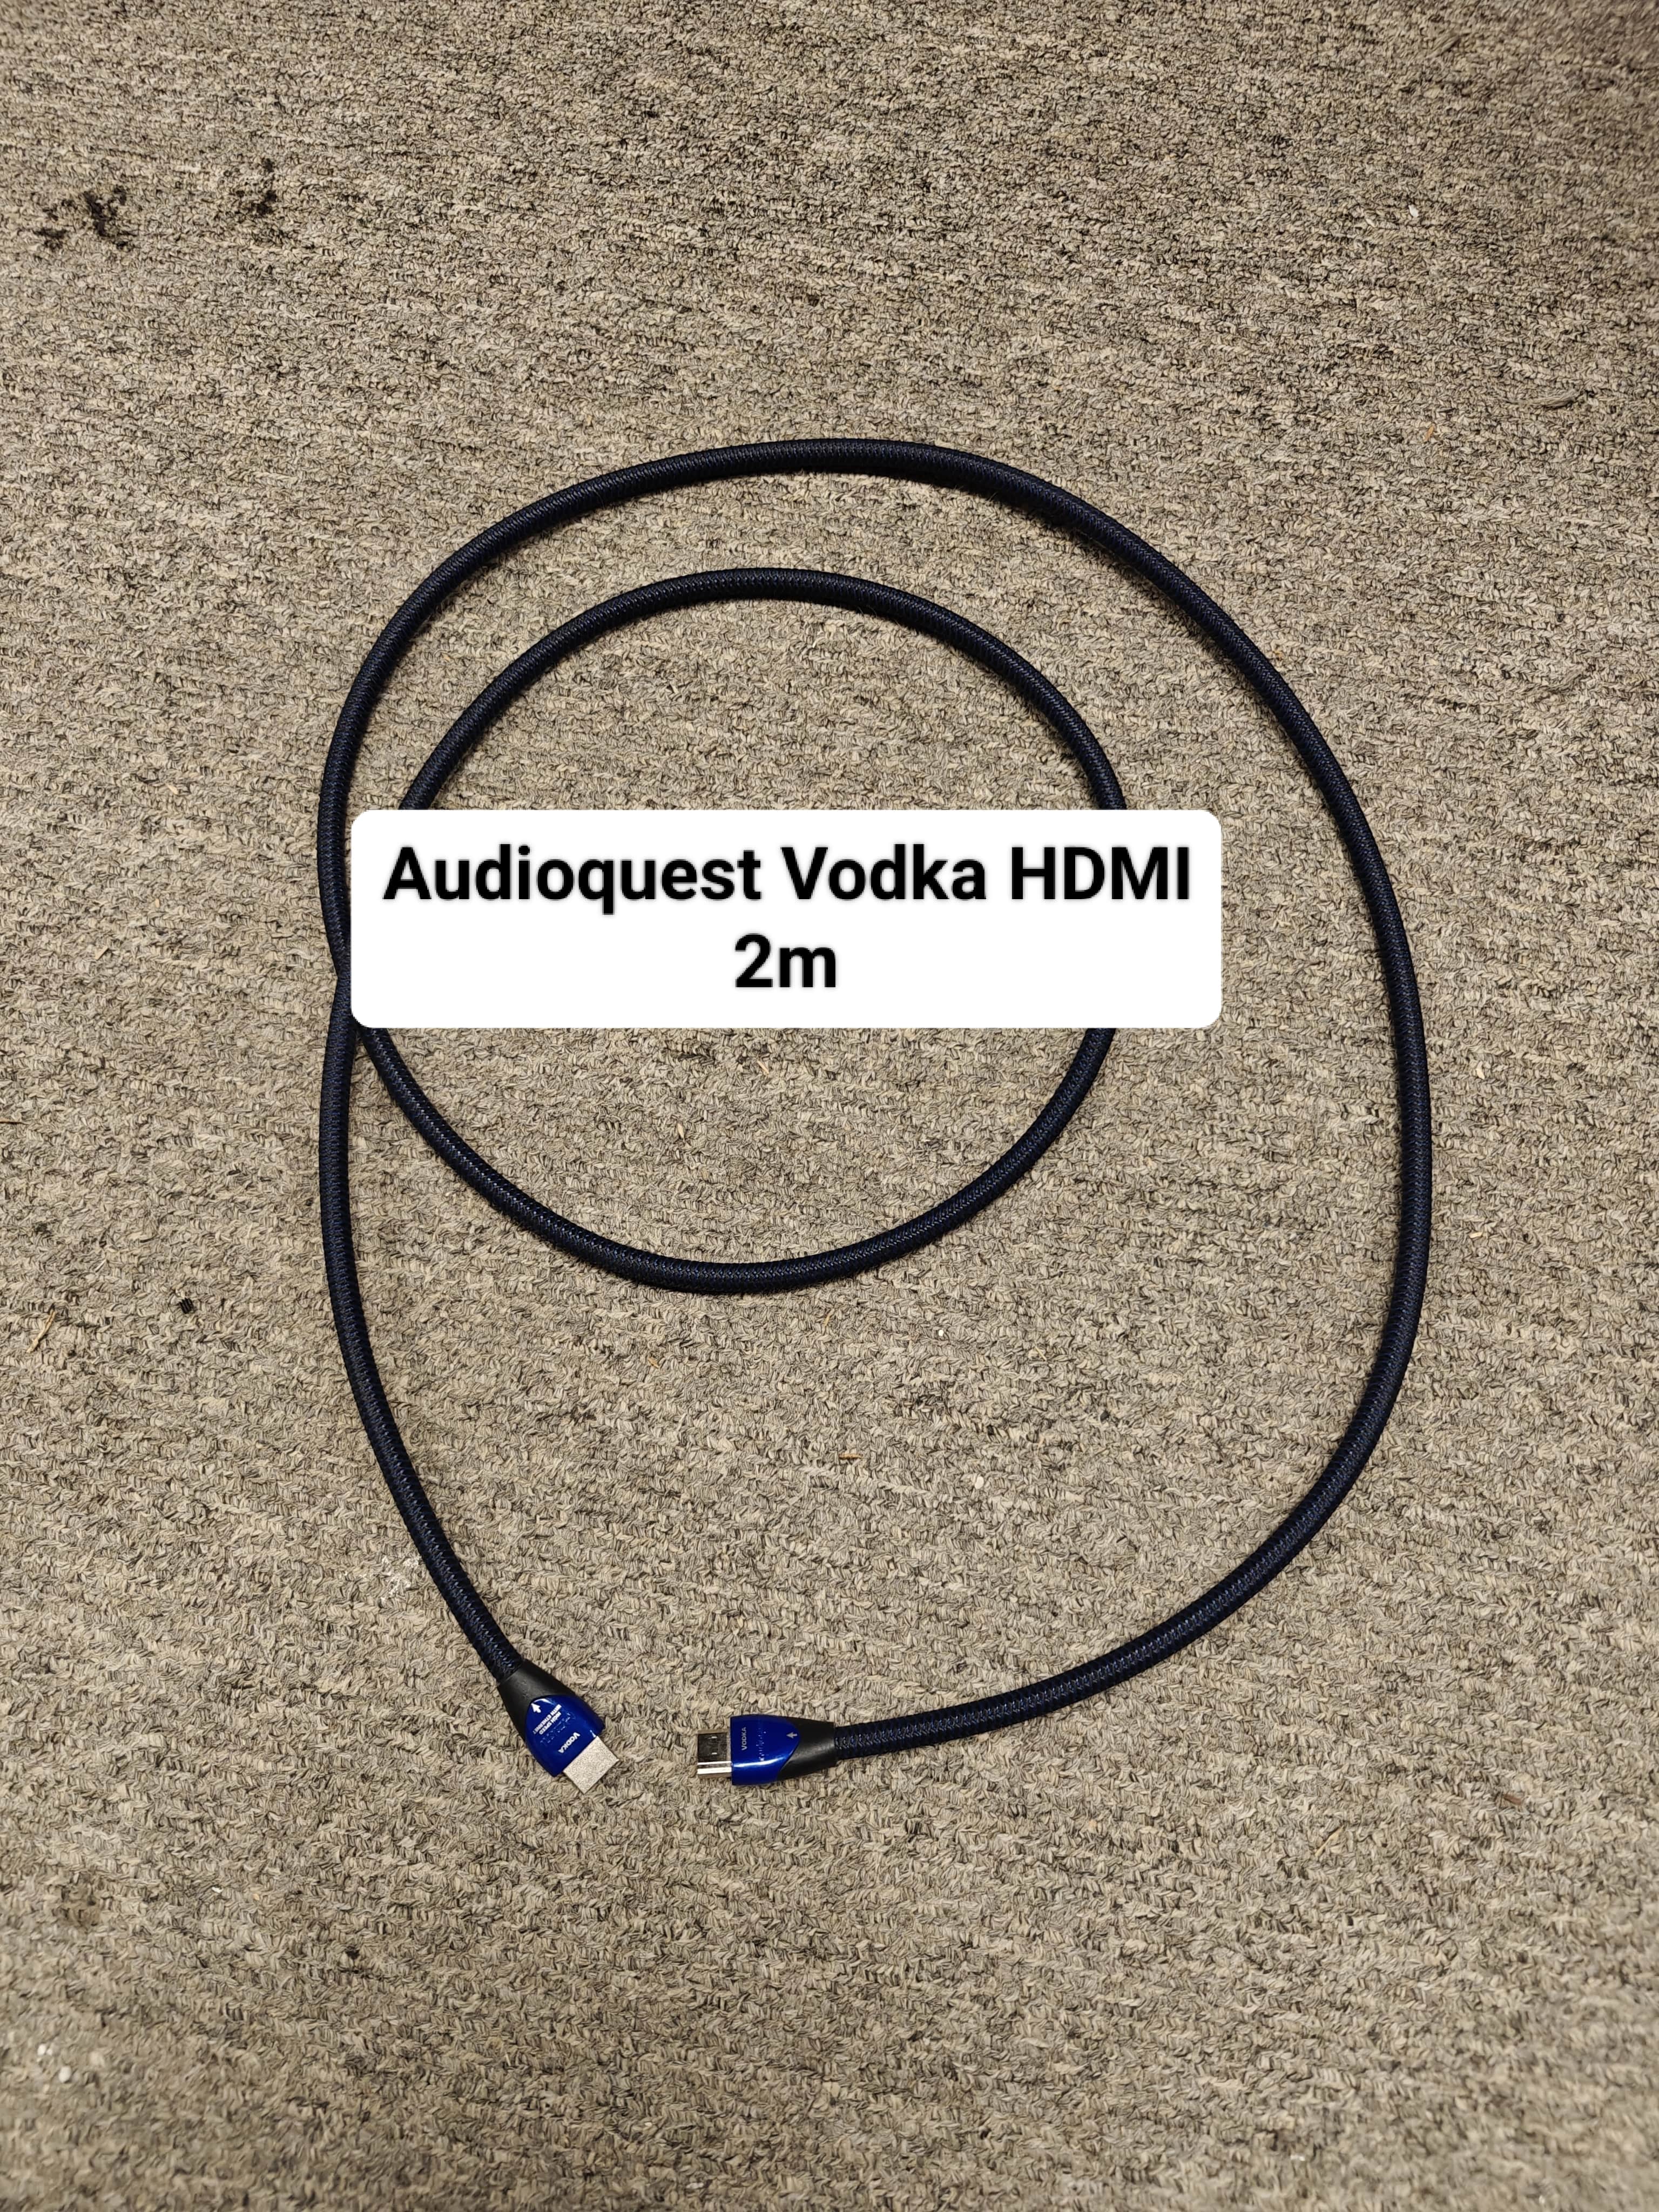 Audioquest Vodka HDMI cable (Pre-Owned) 2m